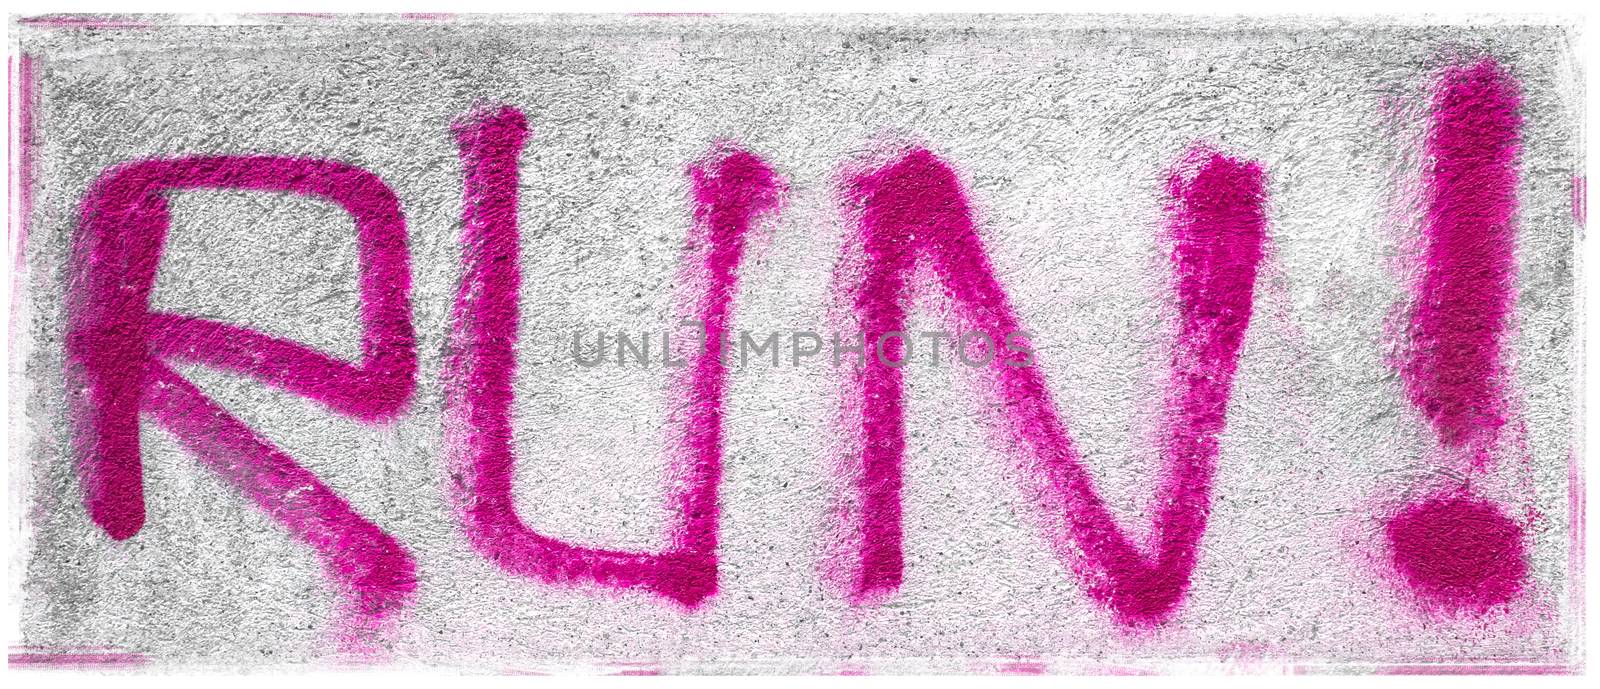 Graffiti PINK text RUN by germanopoli